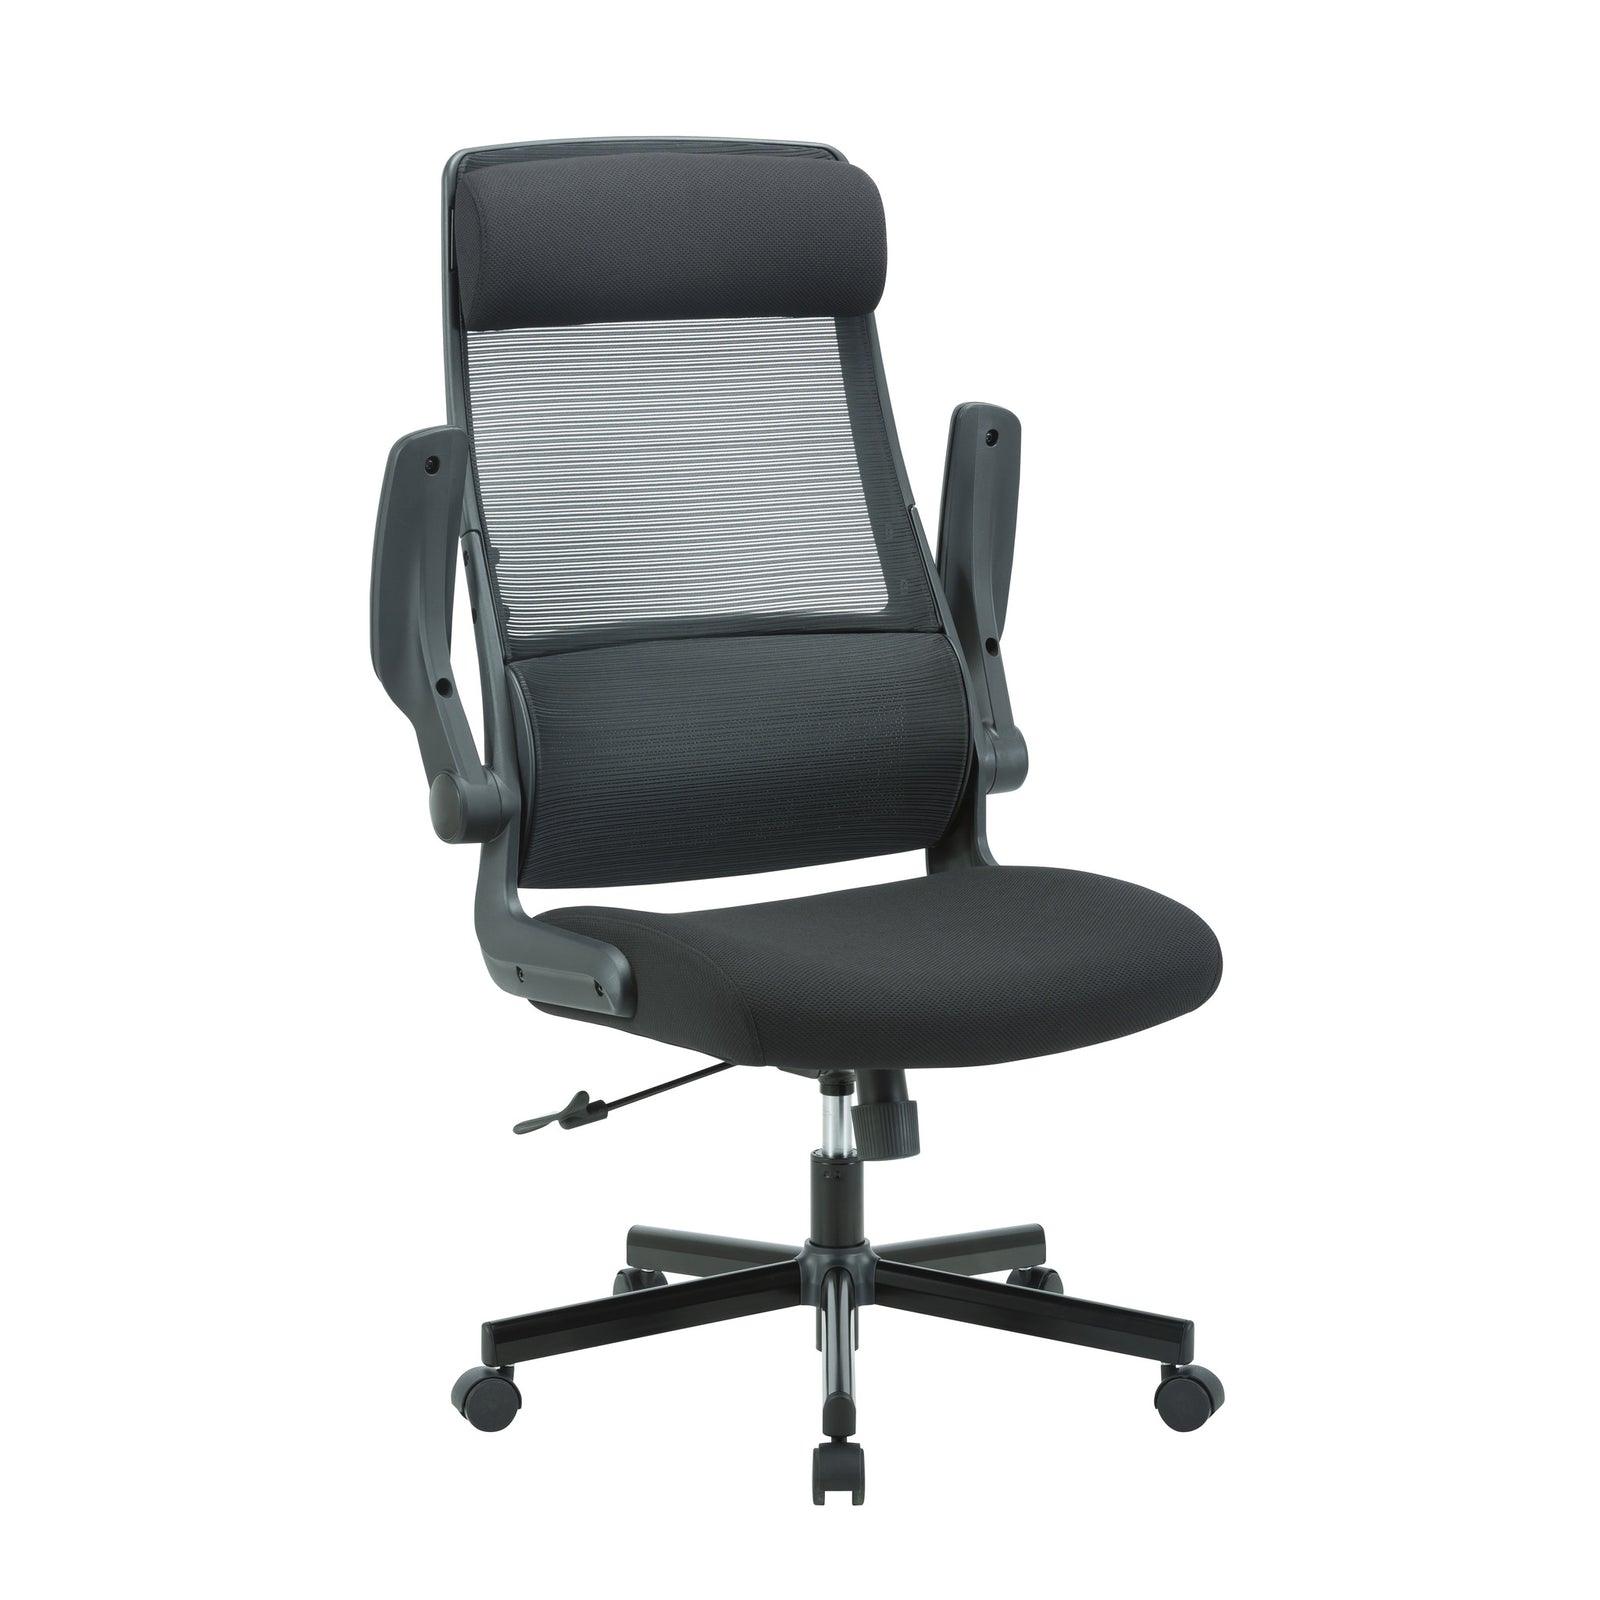 Mesh Ergonomic Office Chair - Black - Office/Gaming ChairsOC8251-UN 2